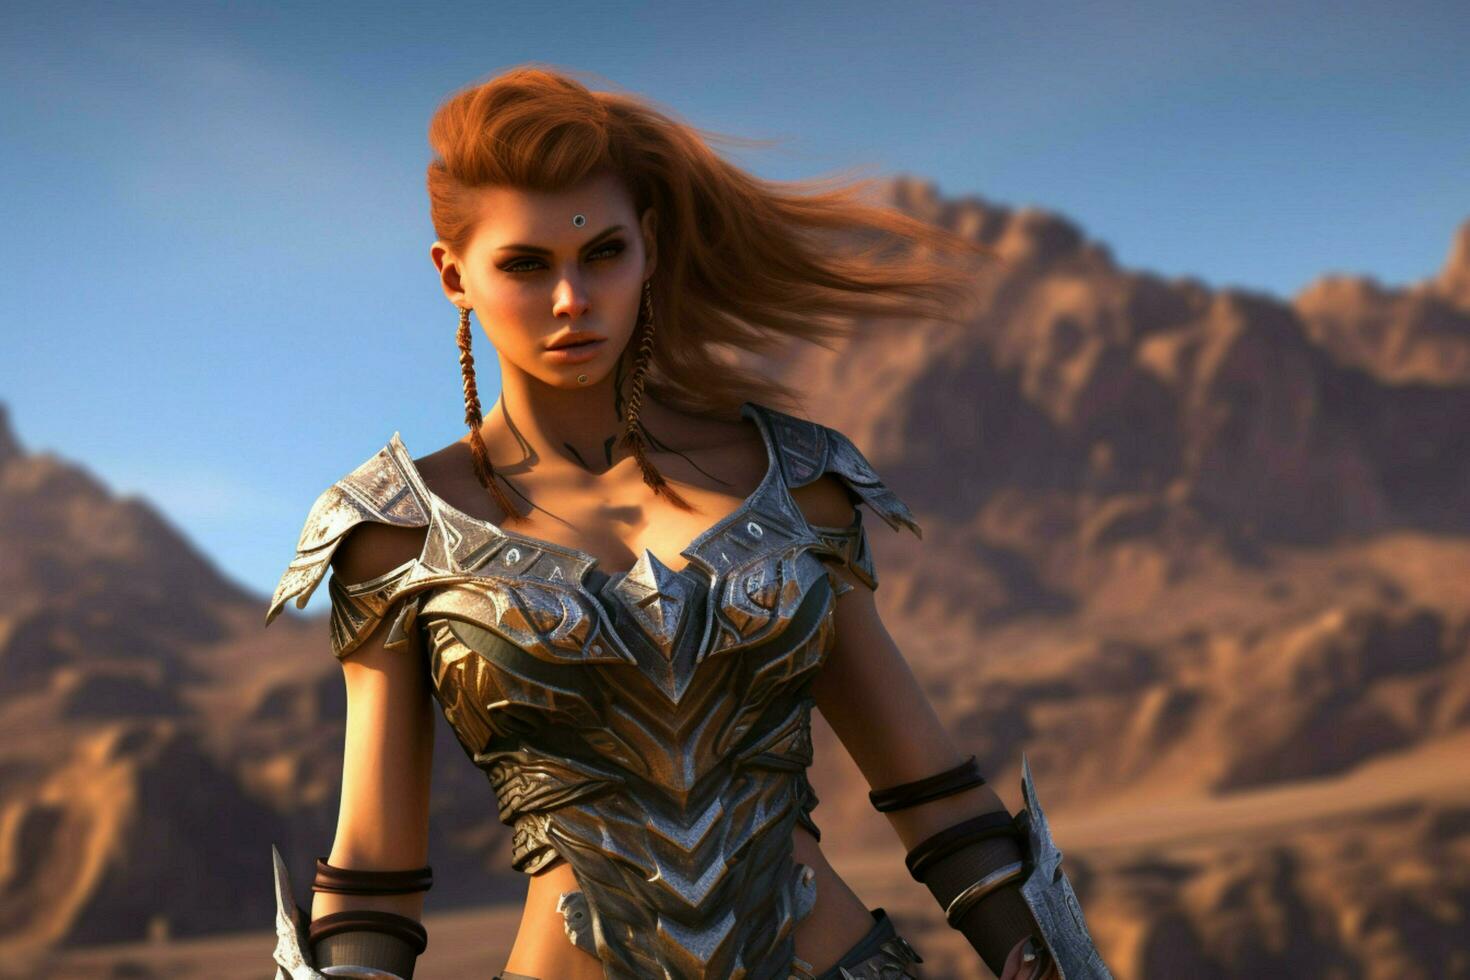 sexy warrior woman gaming fictional world photo